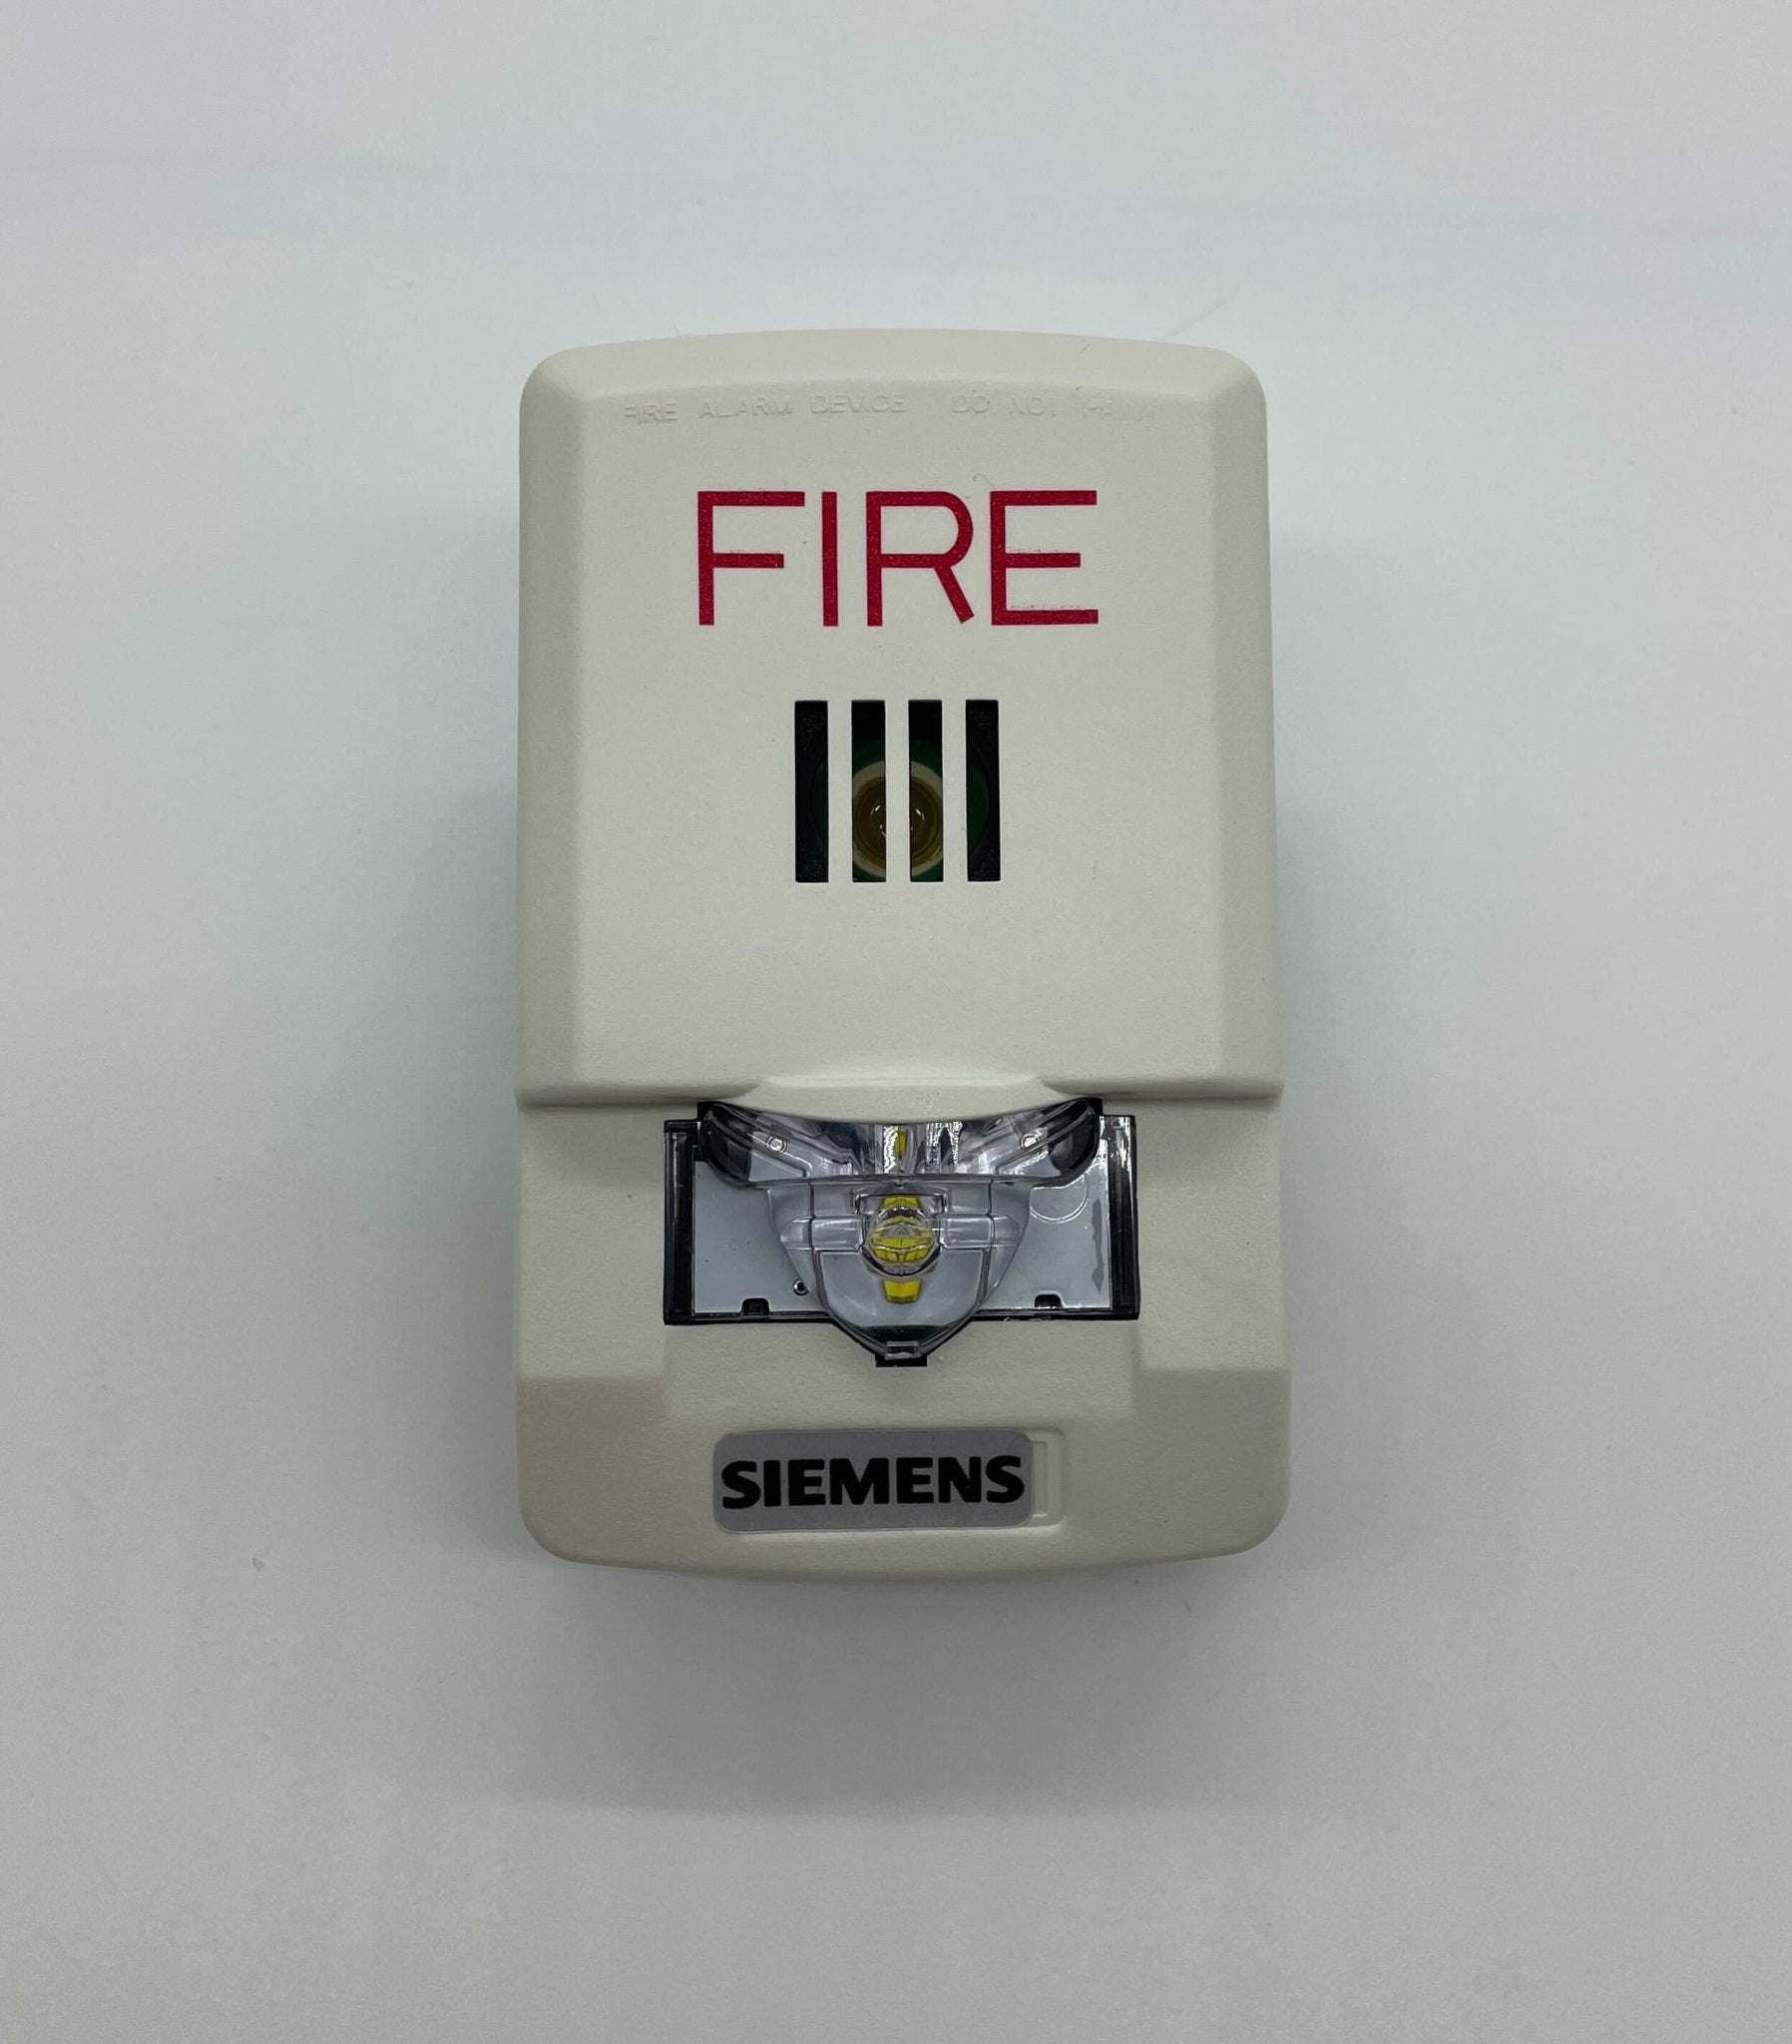 Siemens SLHSWW-F - The Fire Alarm Supplier